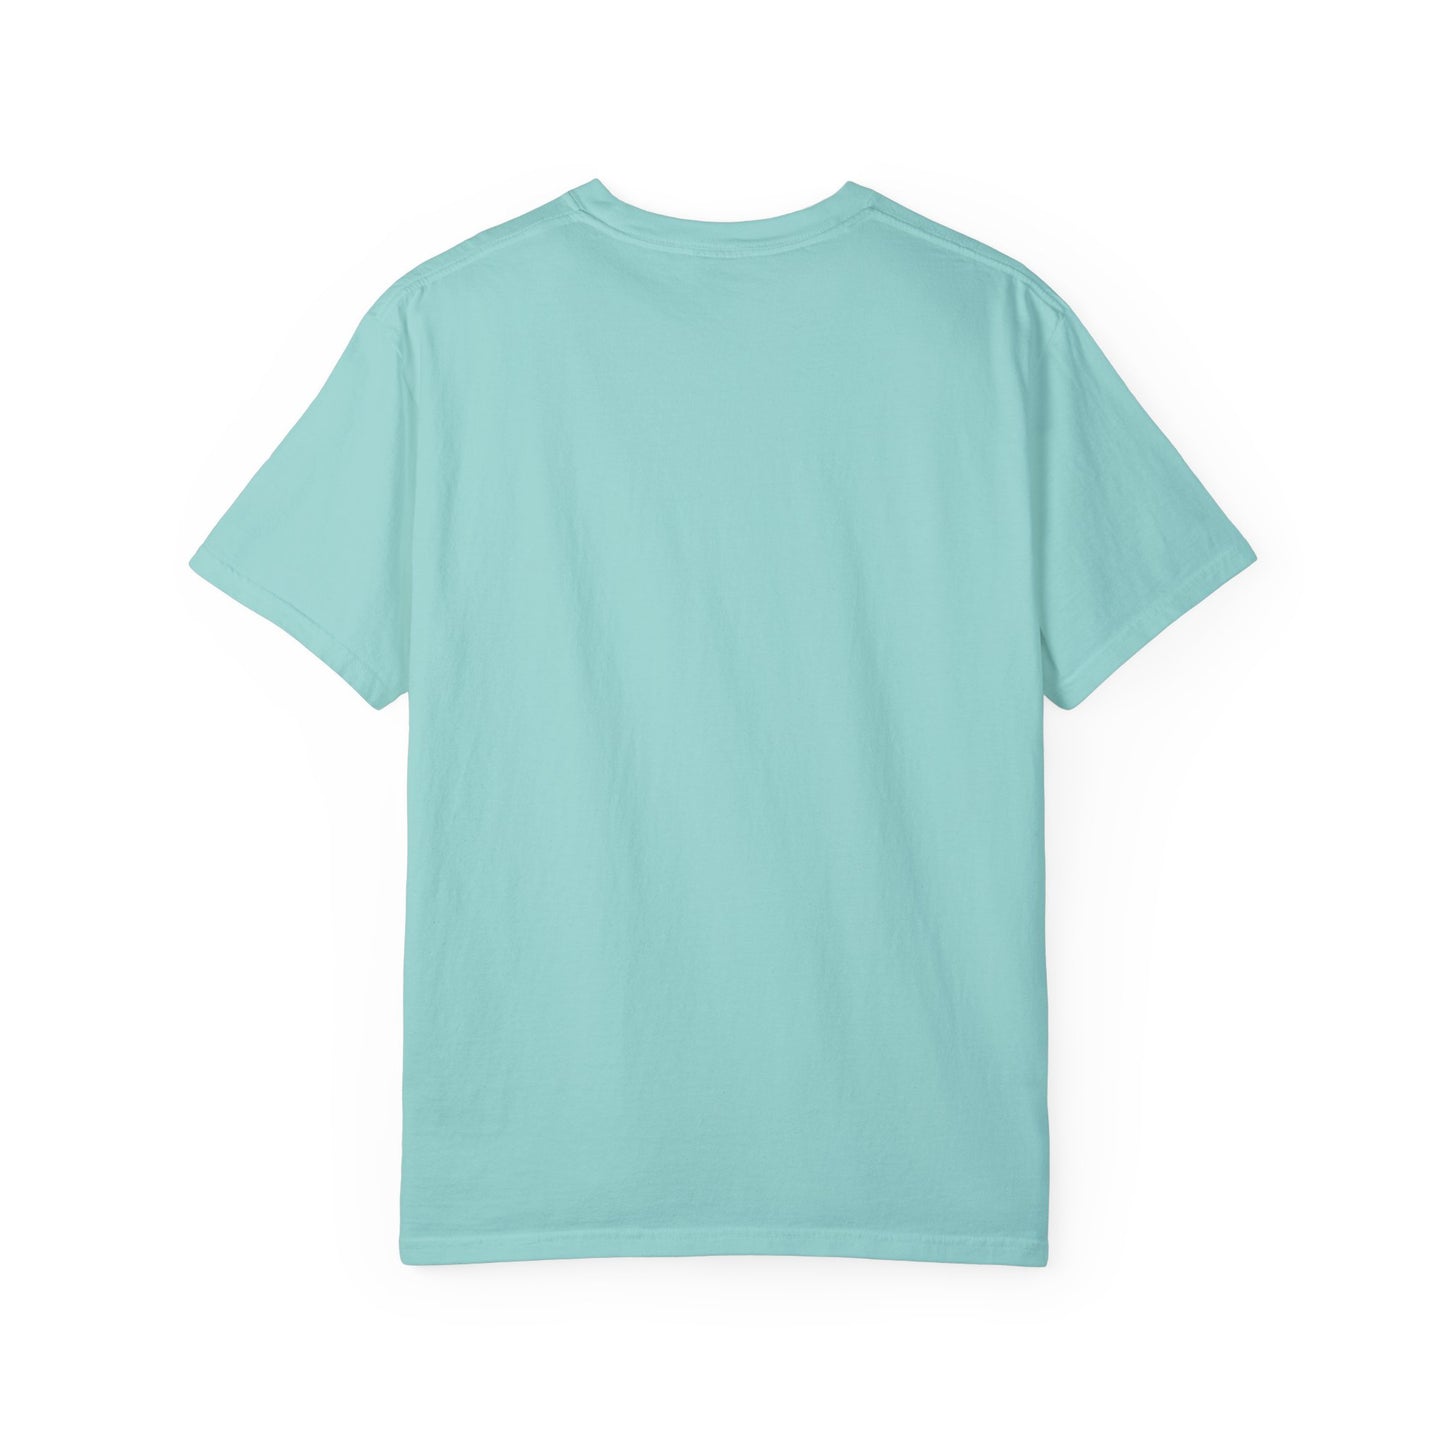 Htown GTA (Basketball) Unisex Comfort Colors T-shirt